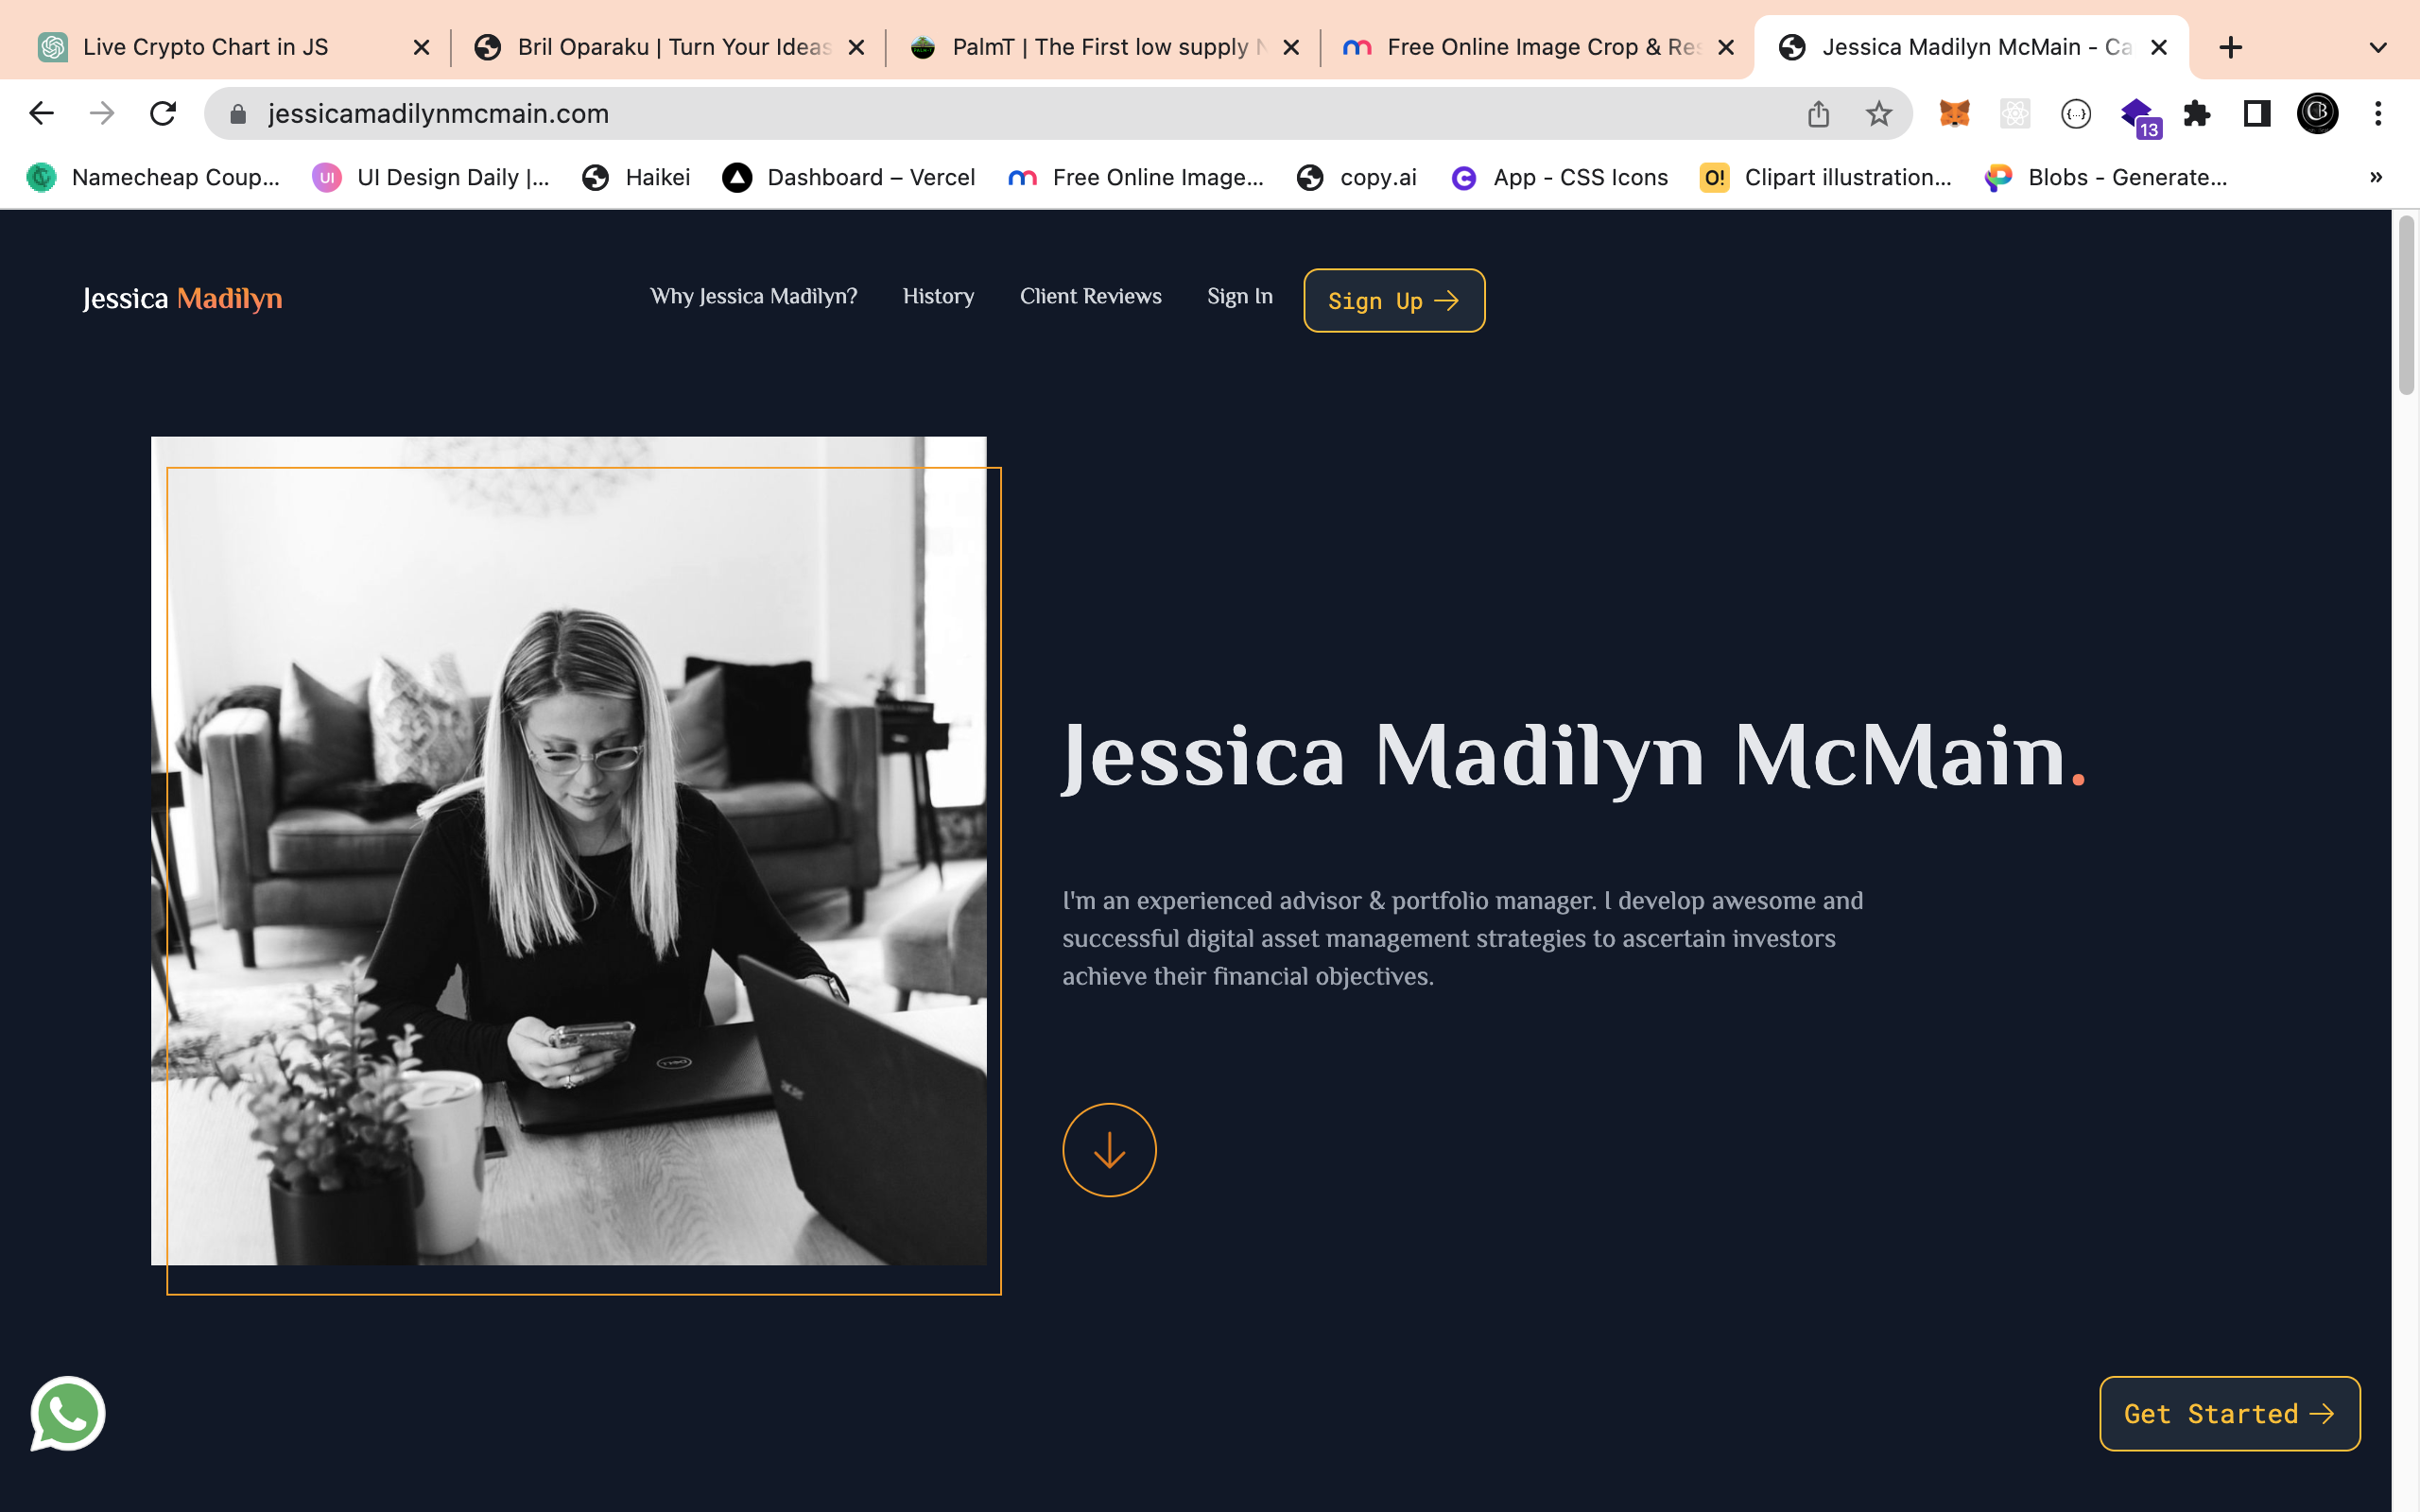 Jessica Madilyn desktop home page